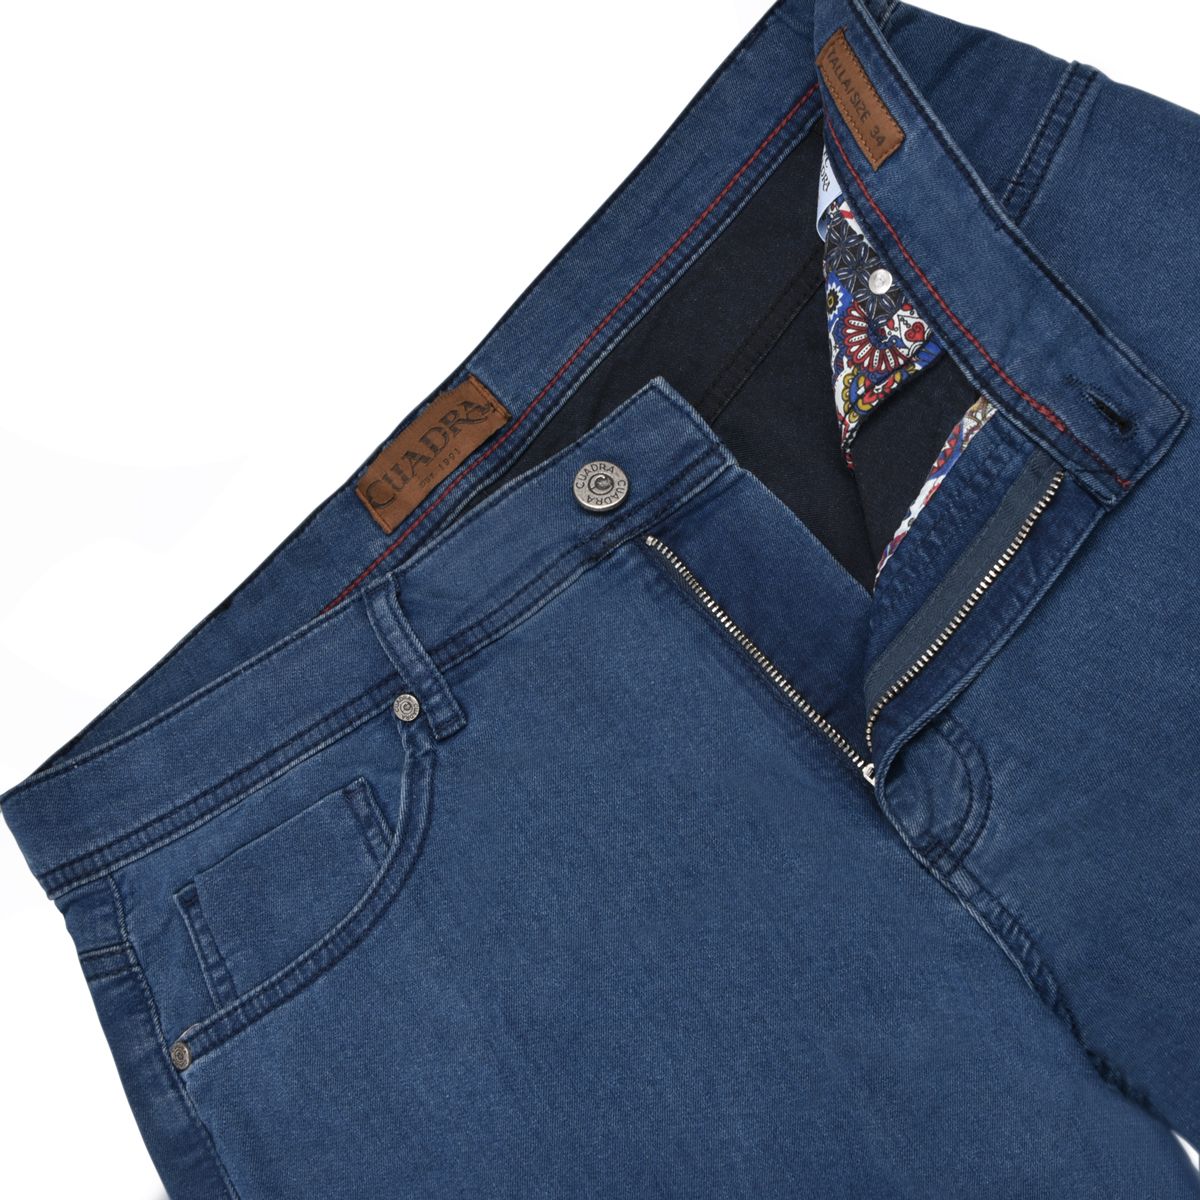 JN0LP10 - Cuadra denim blue ultimate comfort stretch denim jeans for men-Kuet.us